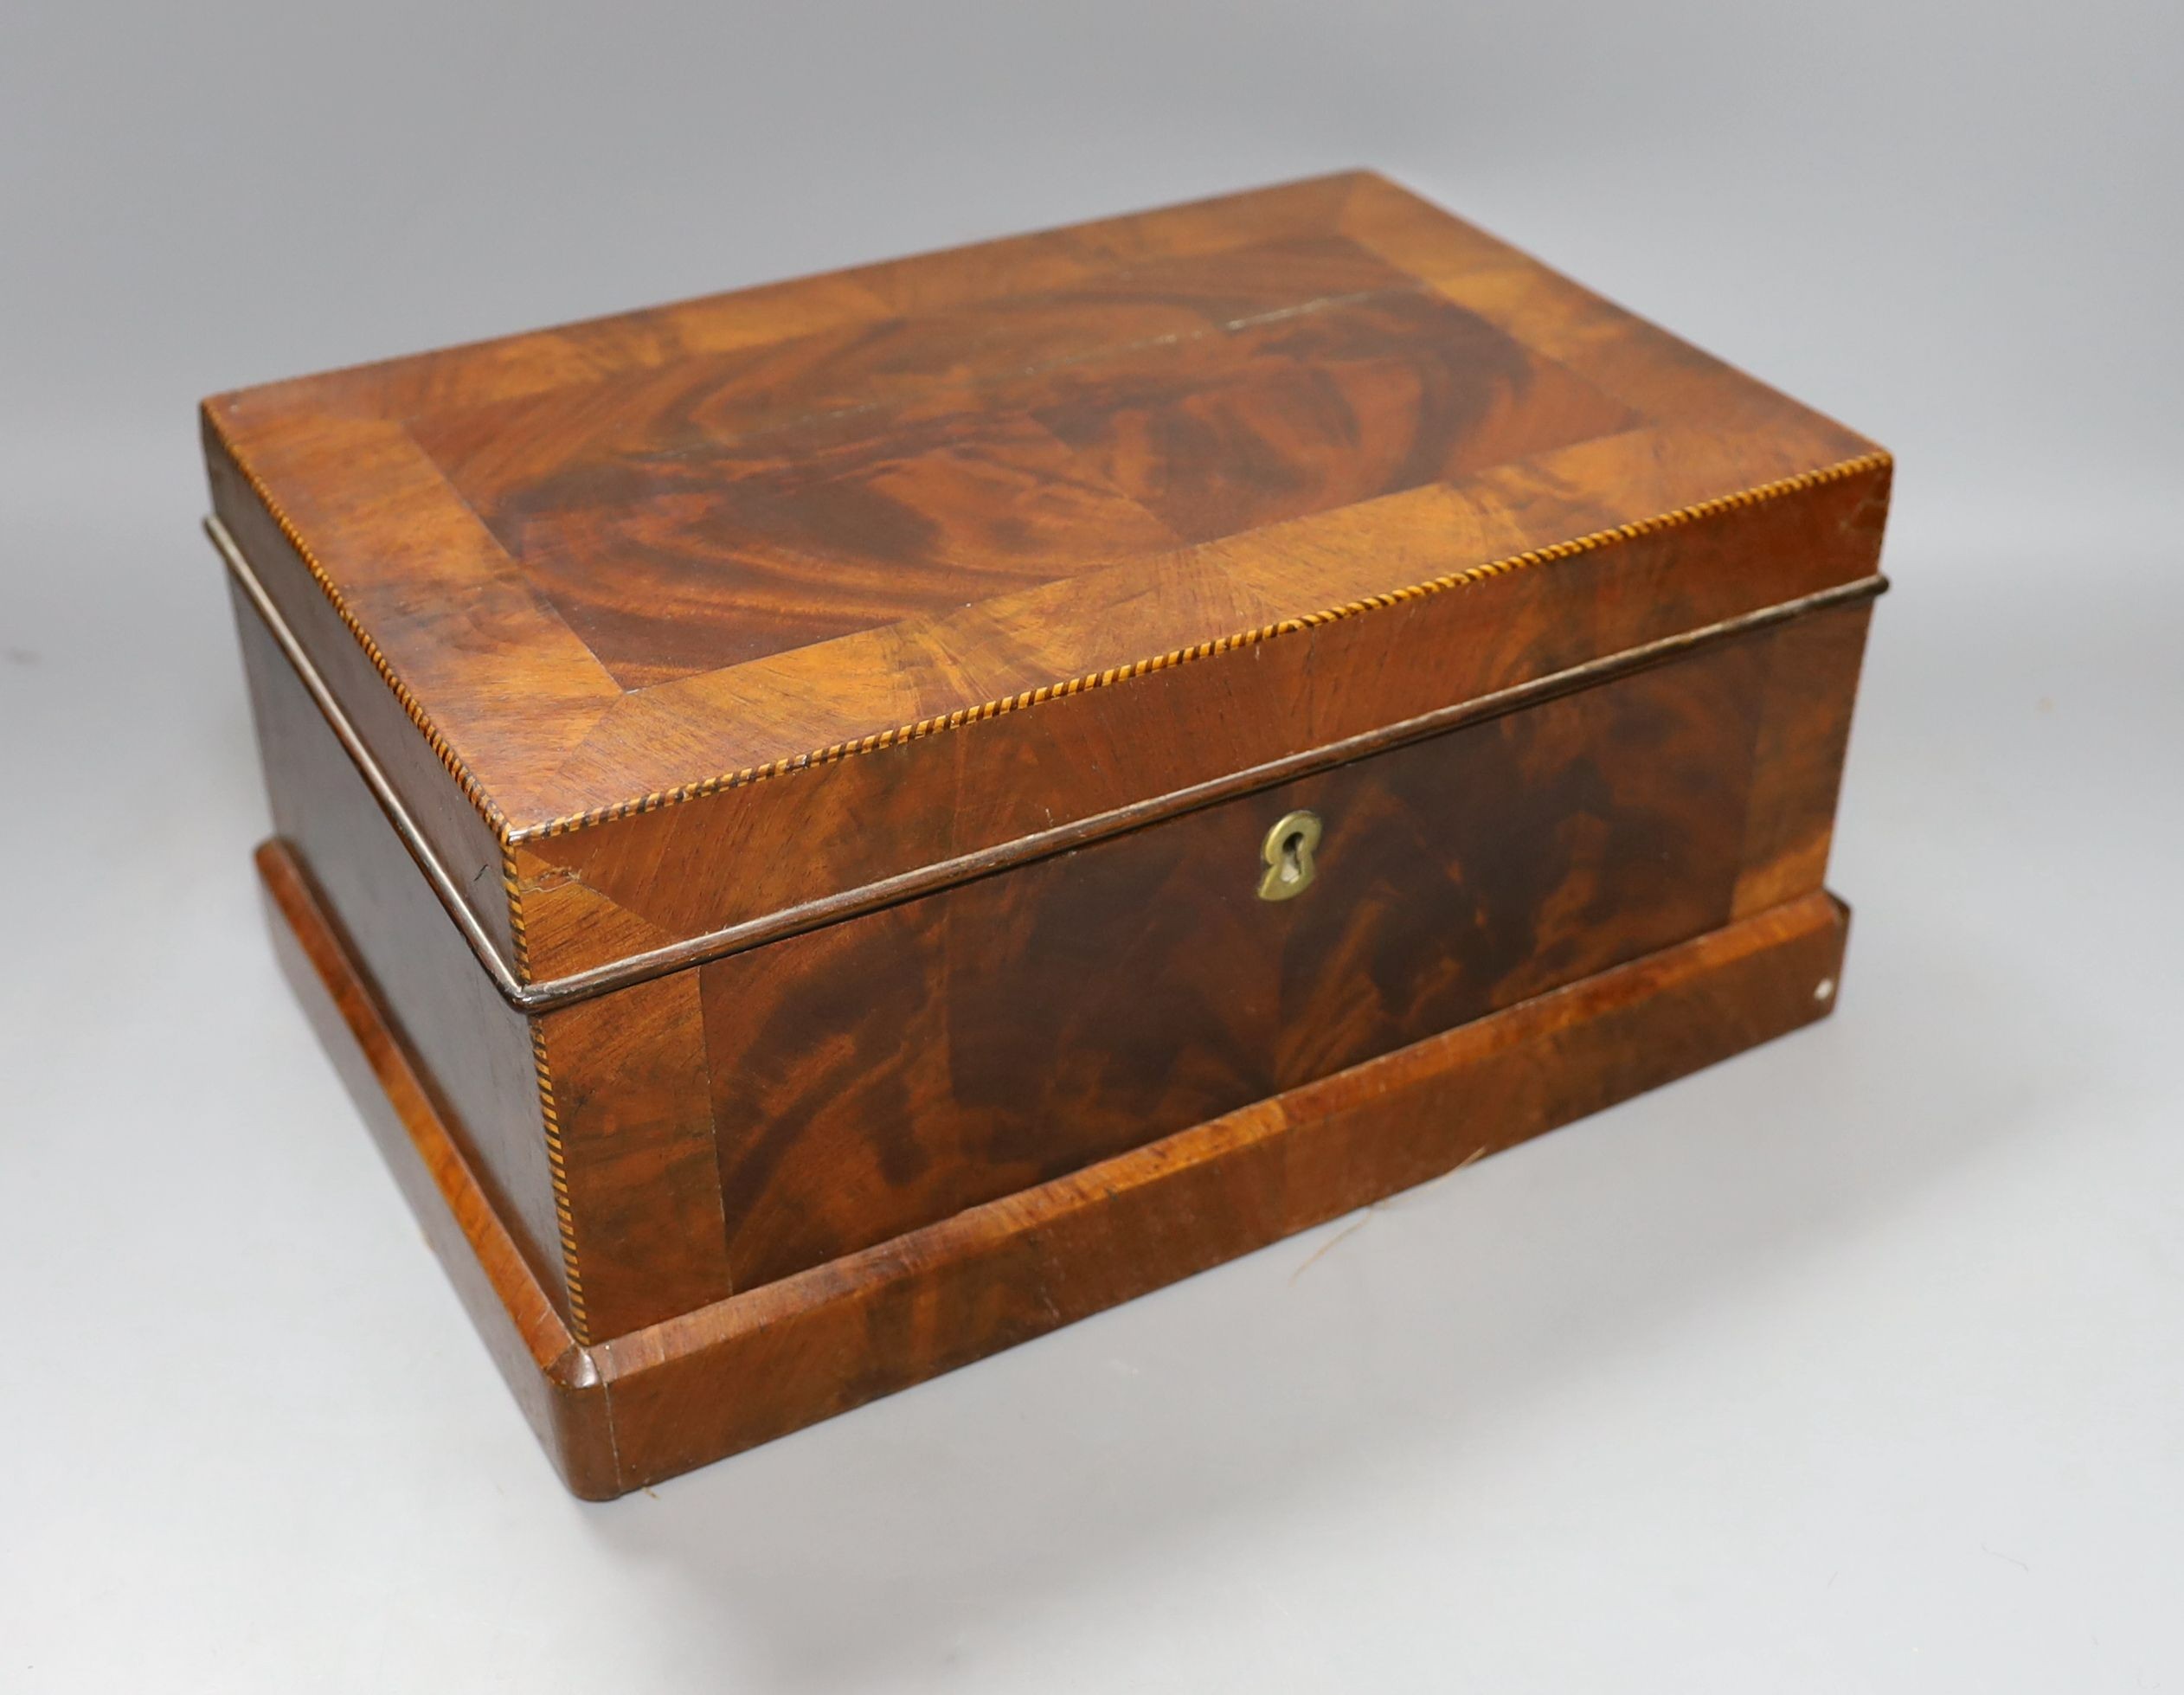 A Victorian mahogany vanity case - 14.5cm tall